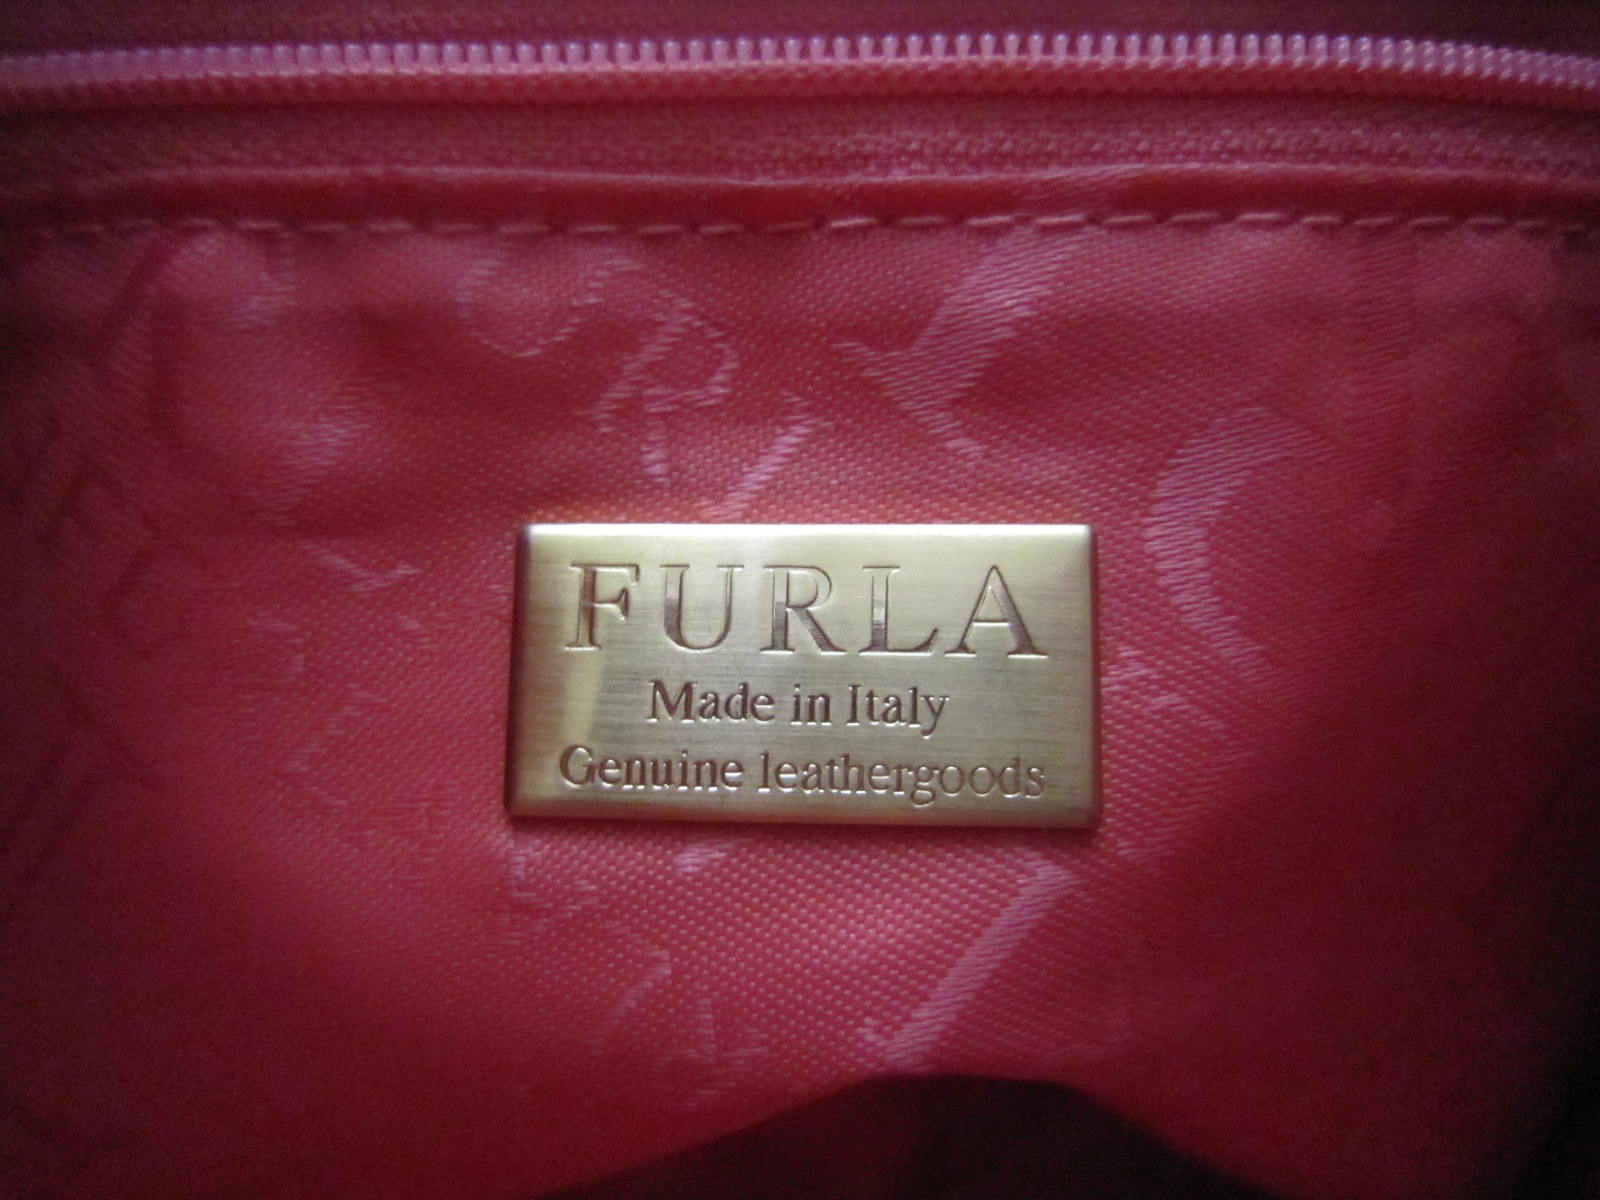 Furla, made in Italyfurla